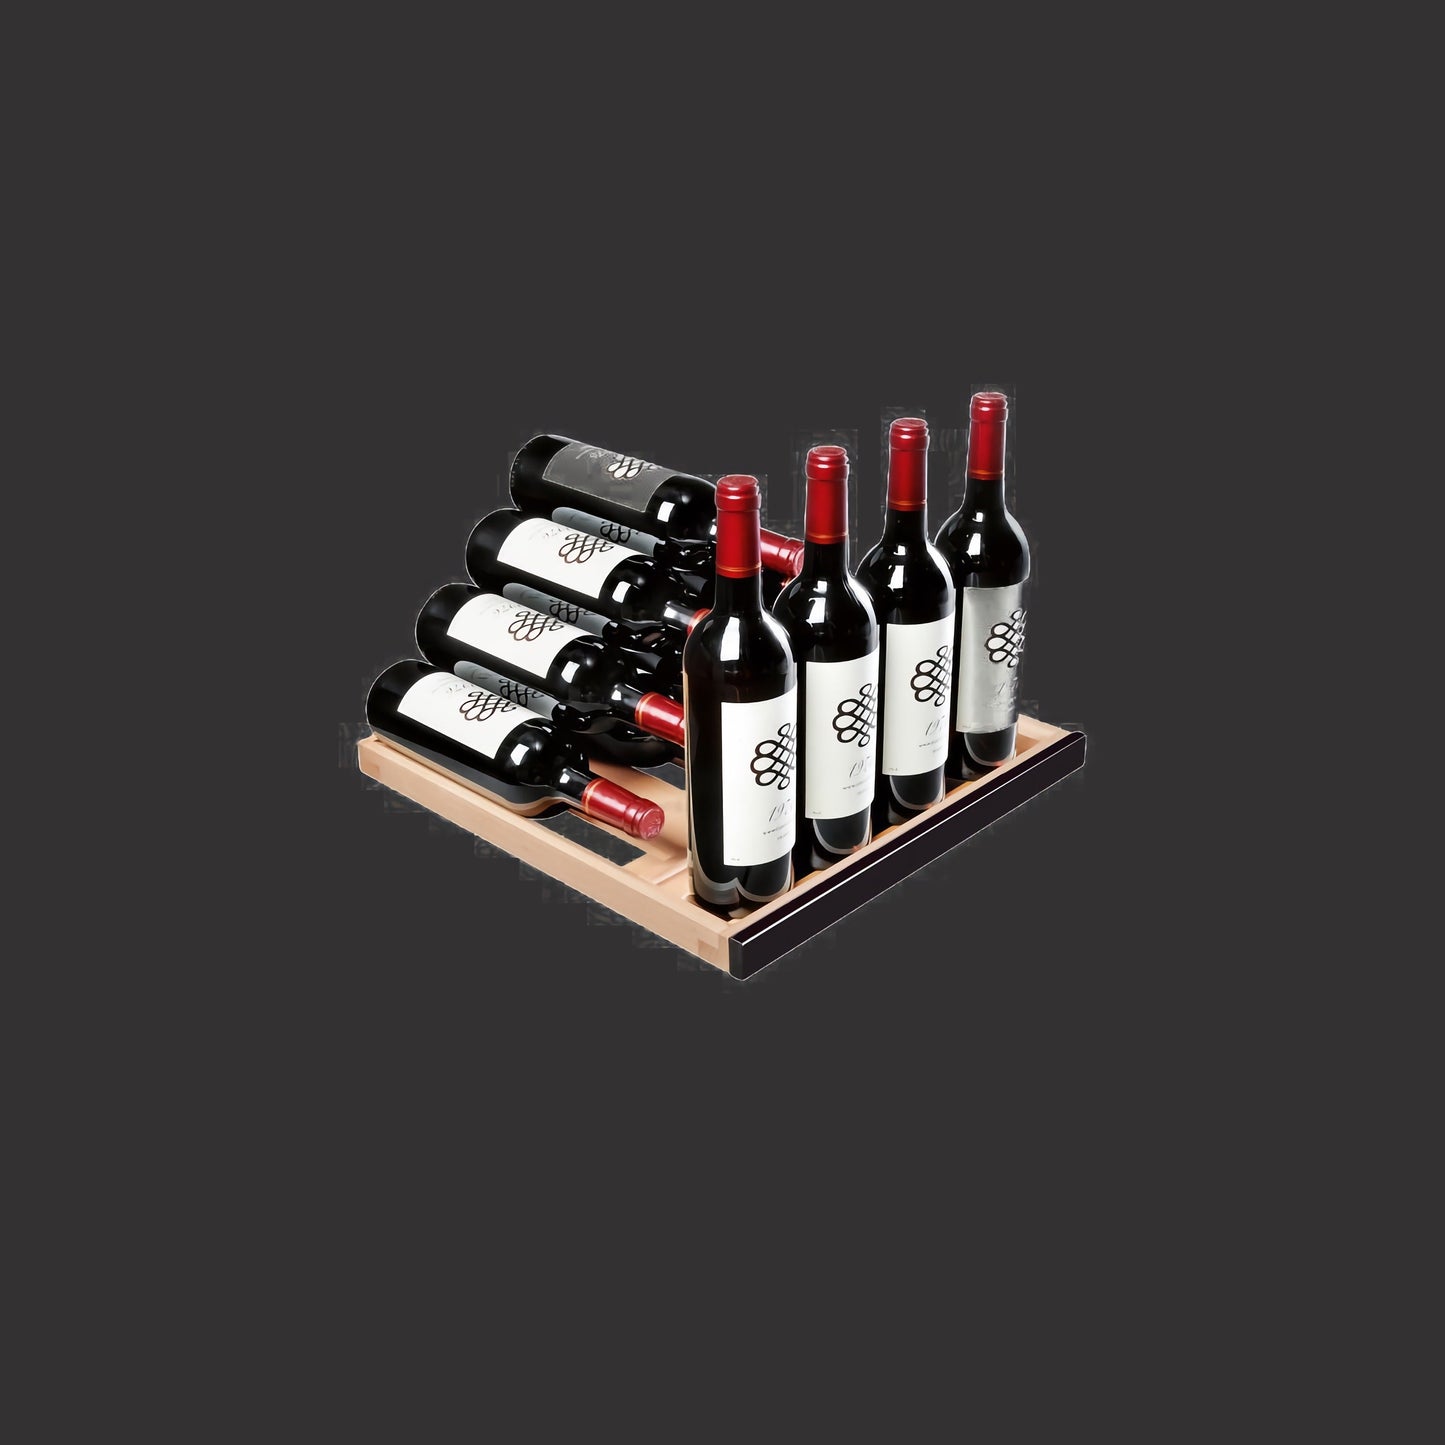 Storage shelf - Glossy black AXIHB for Inspiration range - Up to 22 bottles